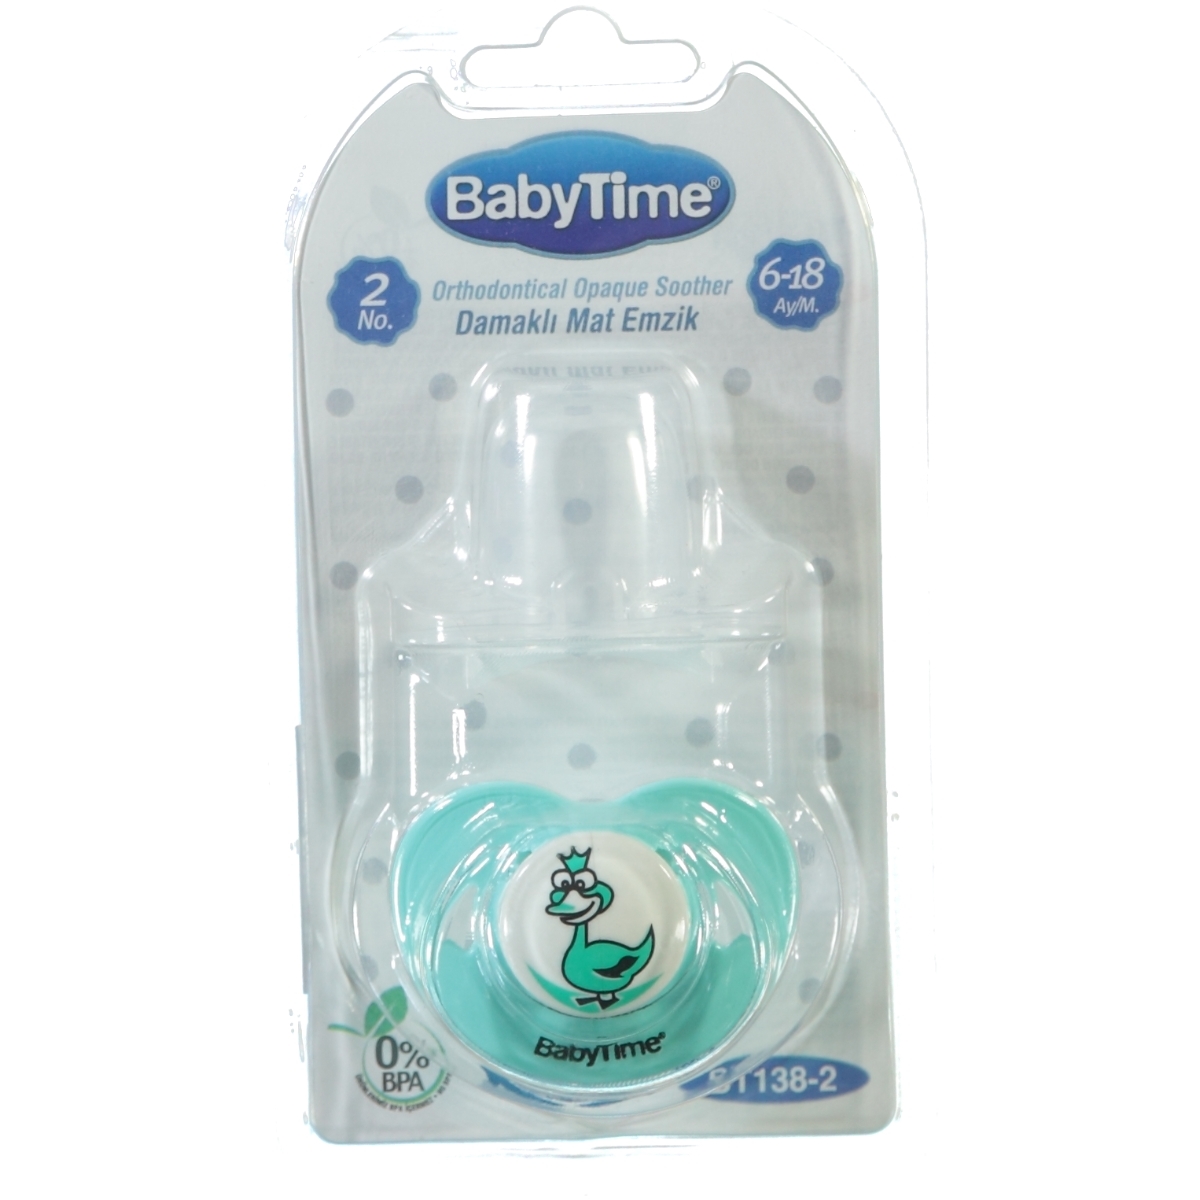 Baby Time Damaklı Silikon Mat Gövdeli Emzik 6-18 Ay Mint Yeşili